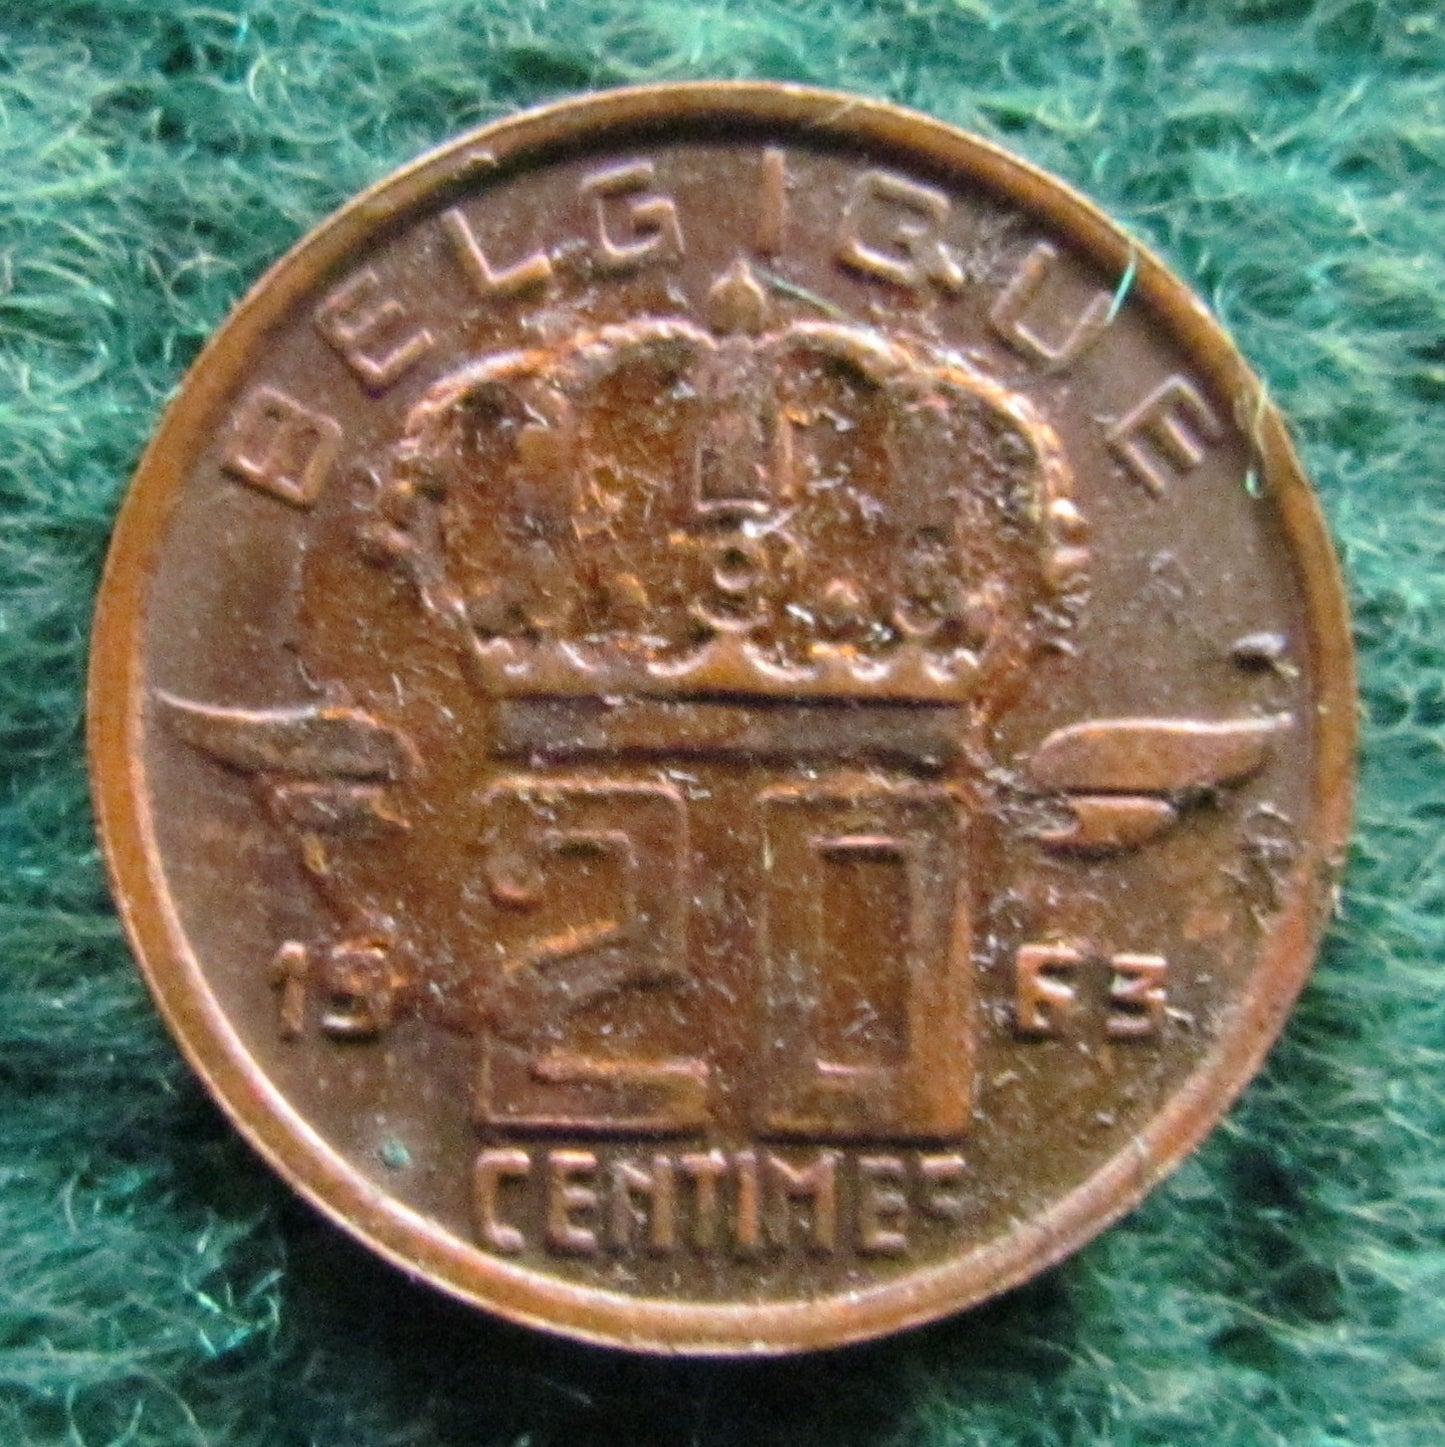 Belgium 1963 20 Centime Coin - Circulated